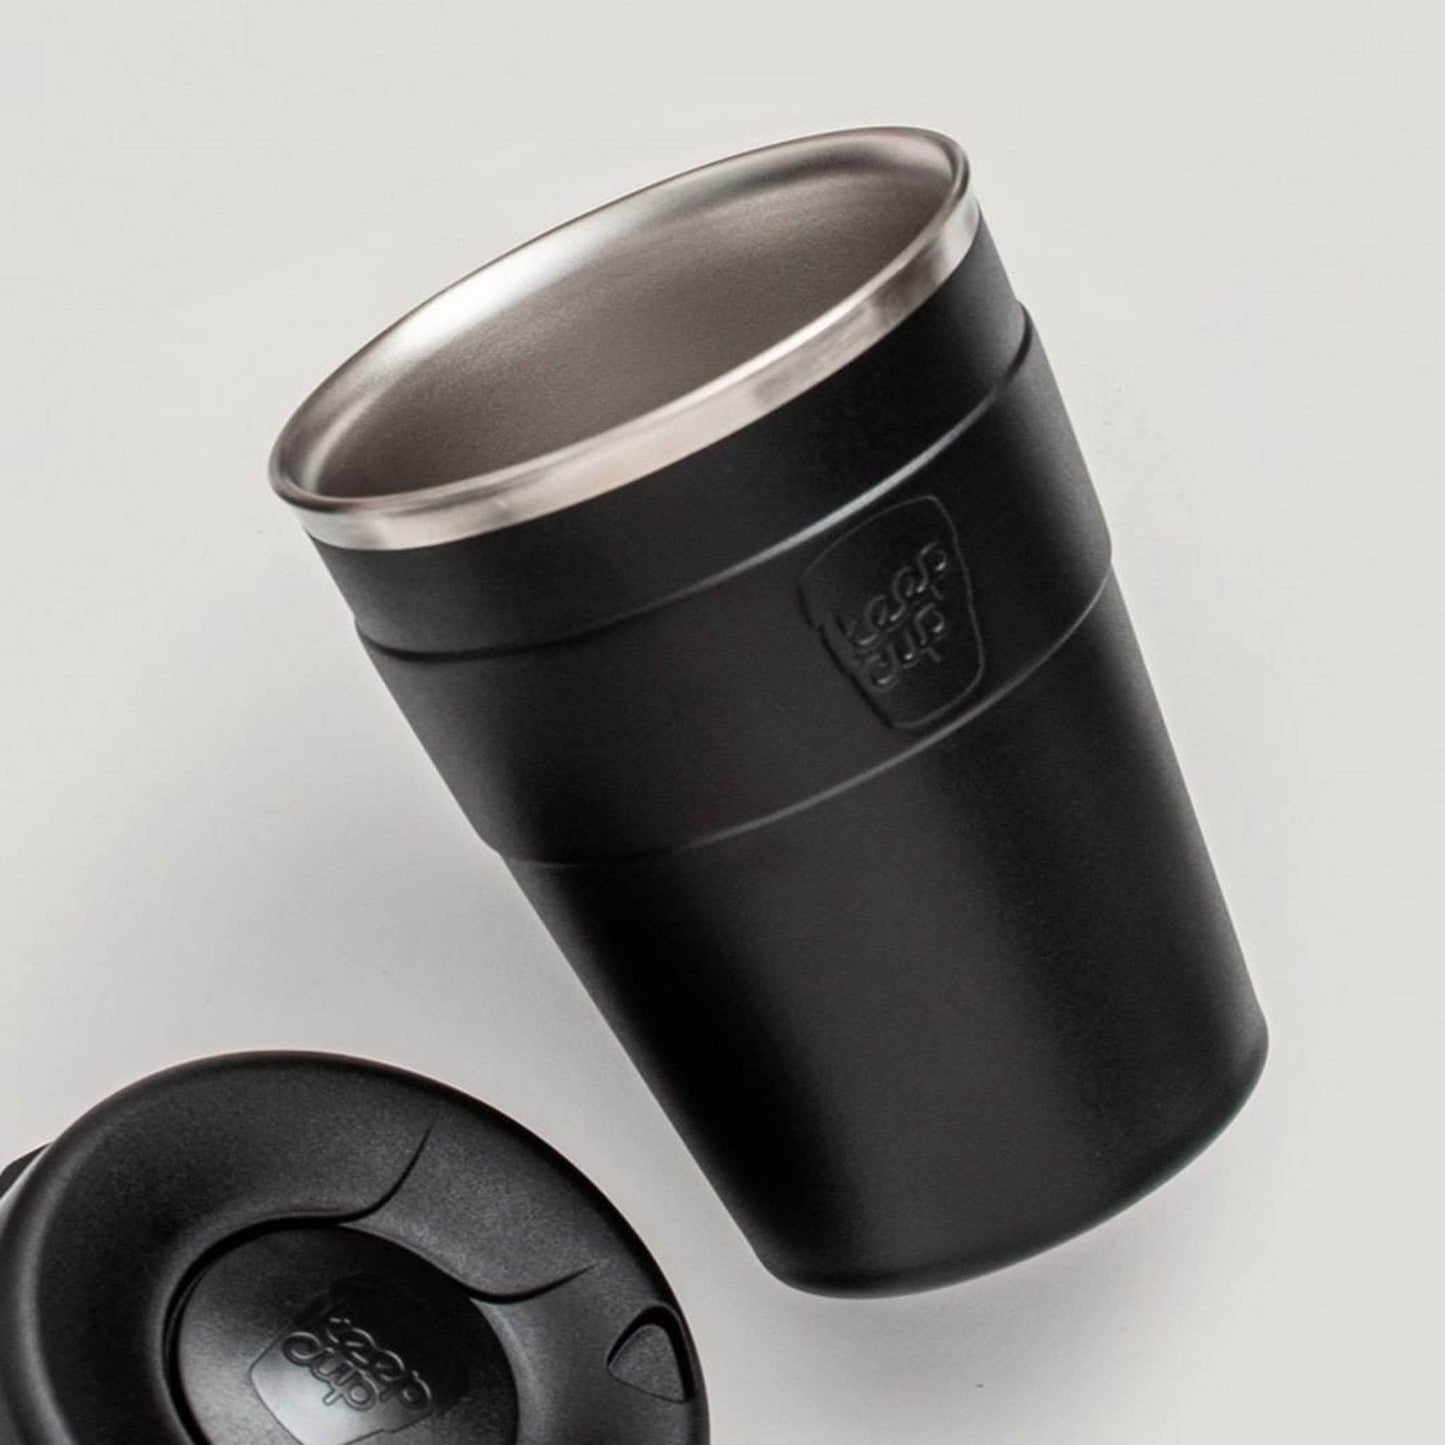 Keepcup Thermal Coffee Cups KeepCup Thermal Insulated Reusable Coffee Cup 12oz Med Black